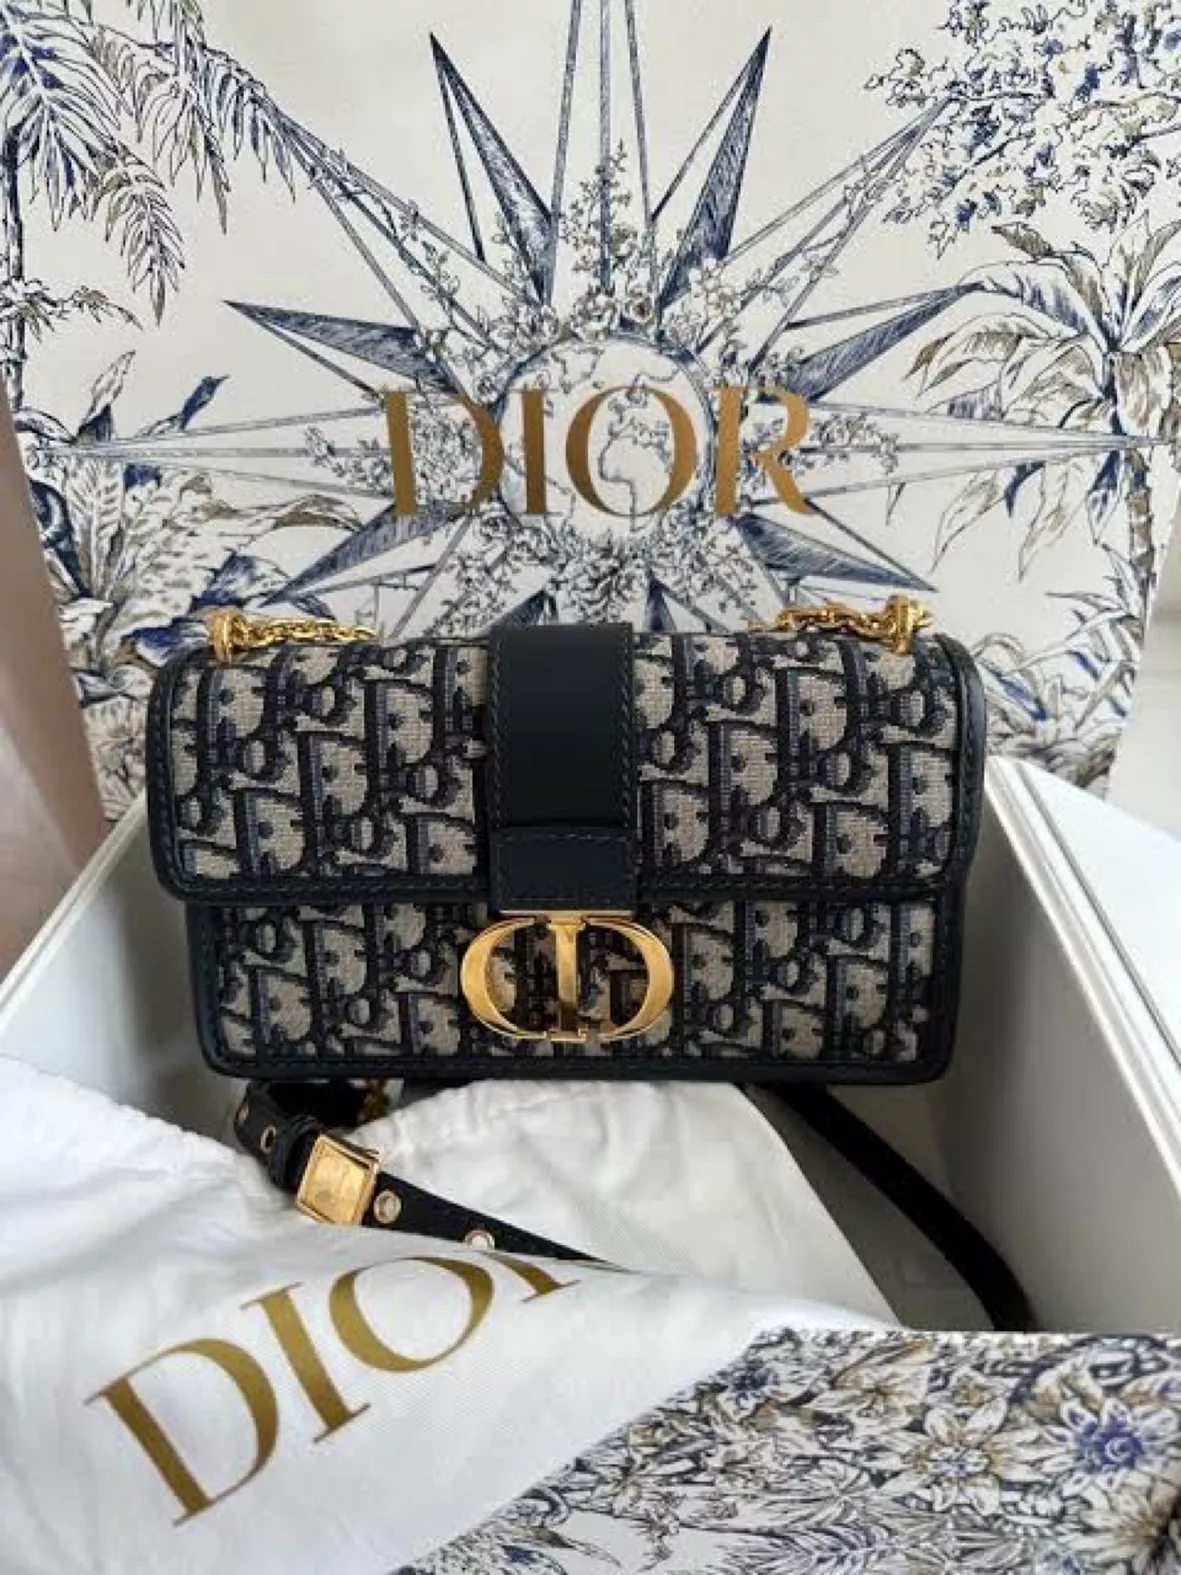 Dior 30 Montaigne East-West Black Bag